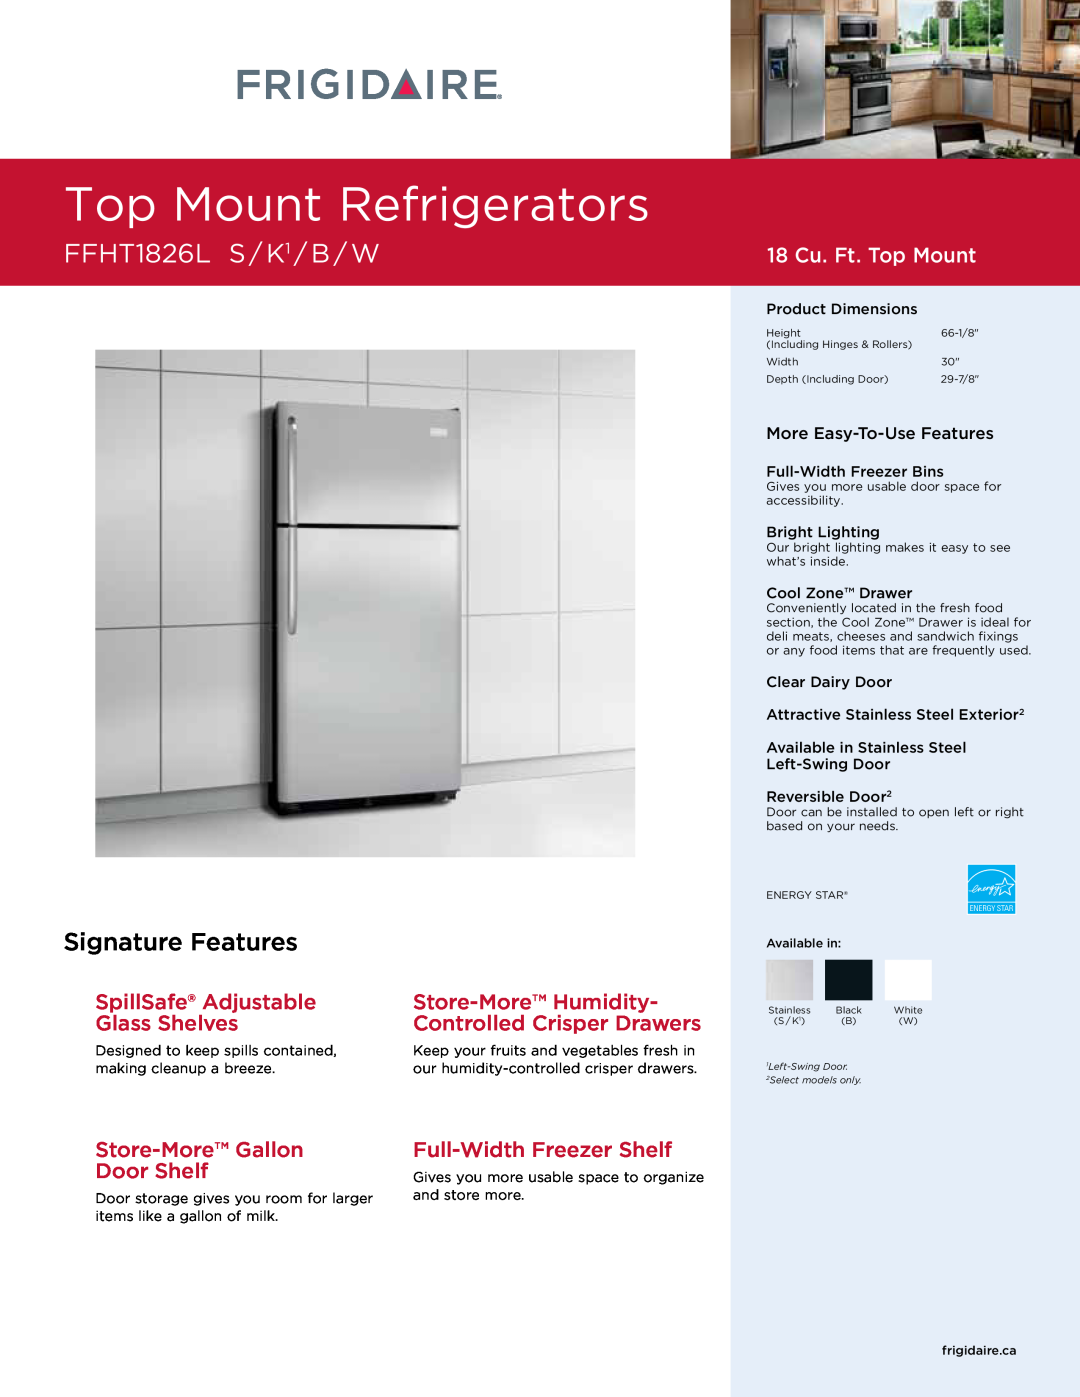 Frigidaire IM115 dimensions Top Mount Refrigerators, FFHT1826L S / K1/ B / W, Signature Features, 18 Cu. Ft. Top Mount 